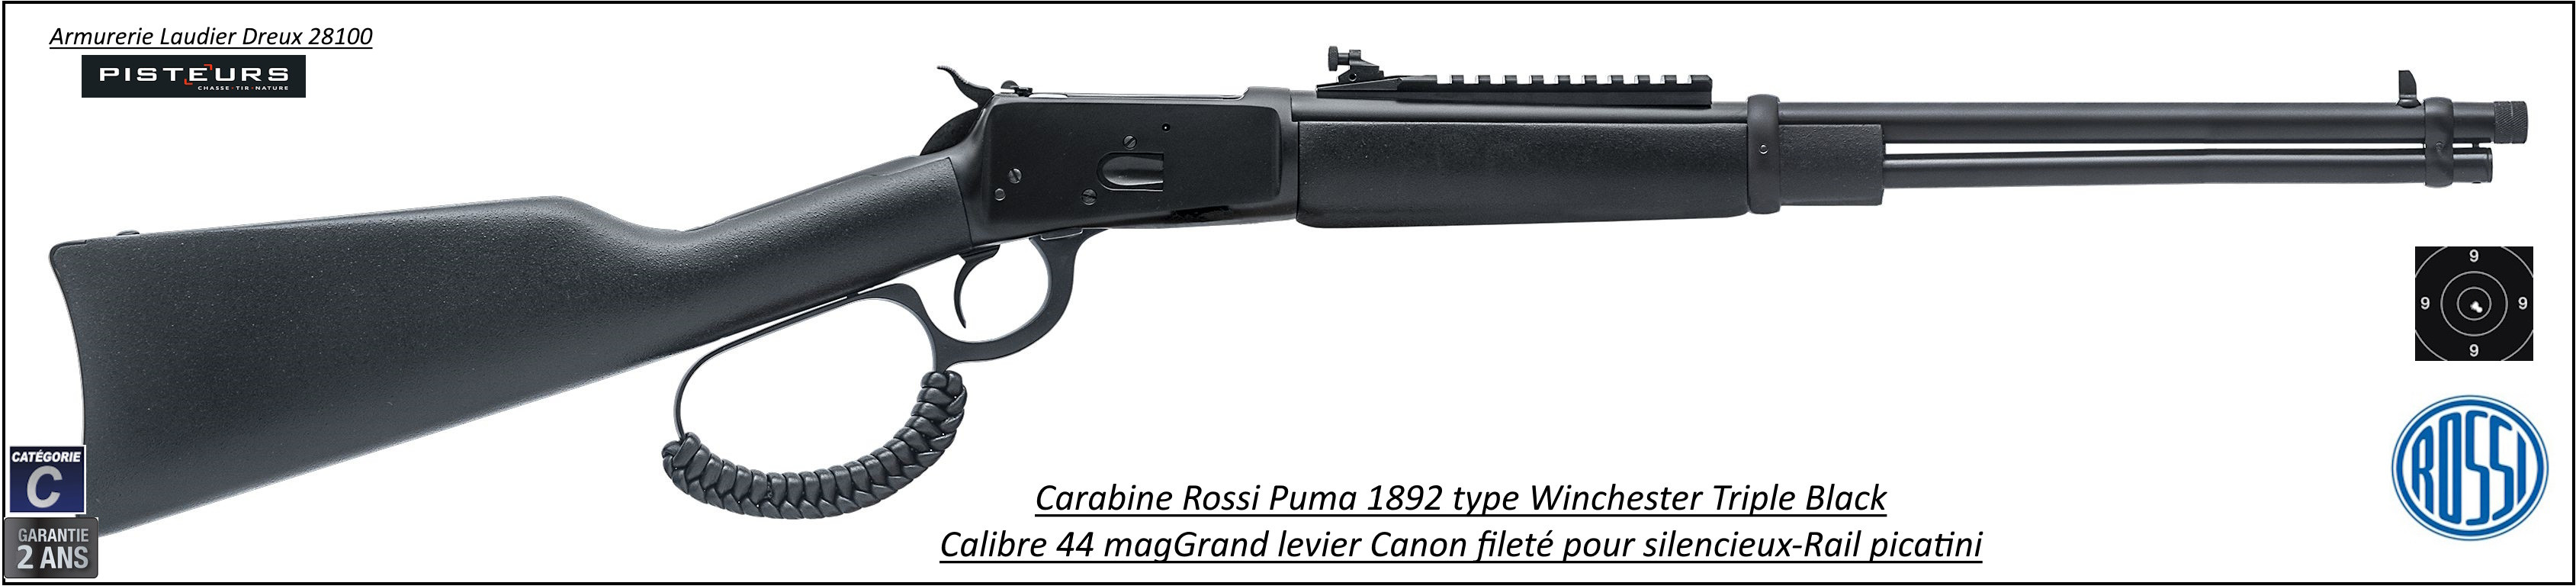 Carabine Rossi Puma Type WINCHESTER 1892 Short rifle levier sous gardeTriple Black Calibre 44 mag-9+1 coups Canon fileté-Ref Ro000017